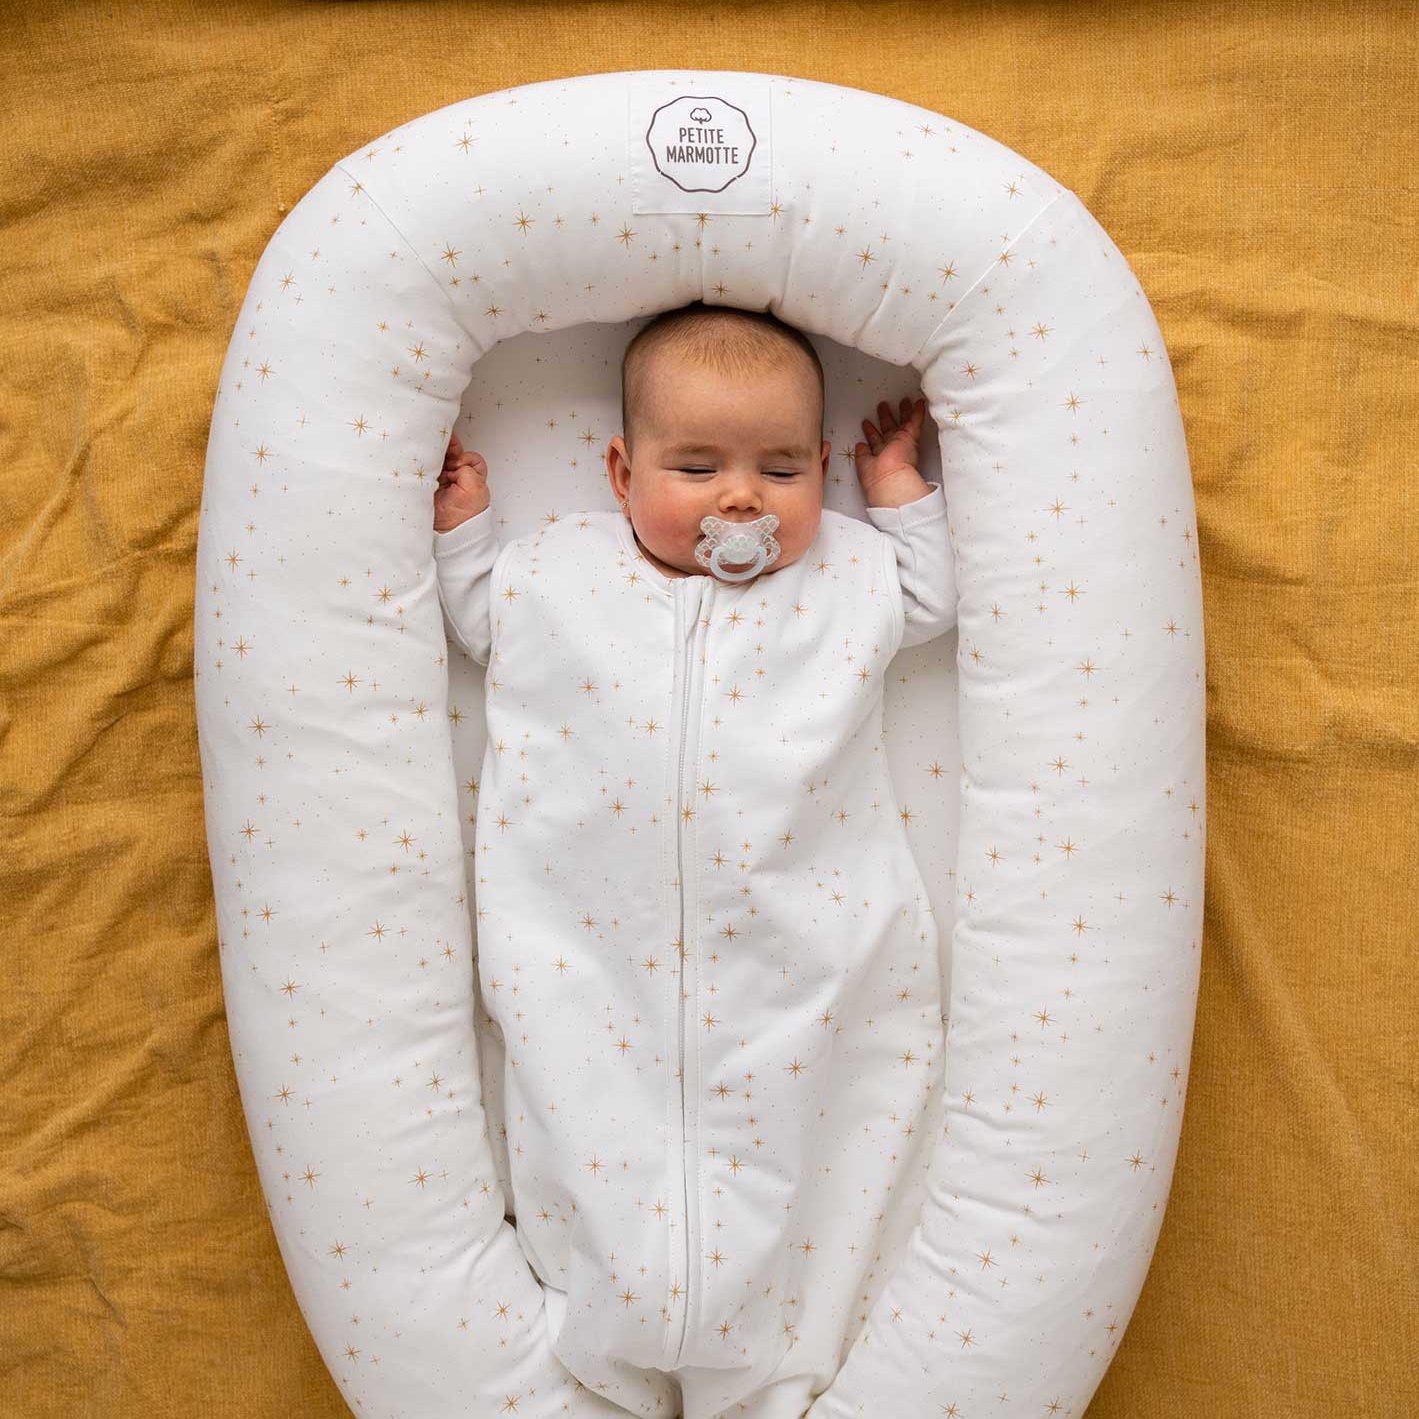 La temperatura ideal para dormir un bebé